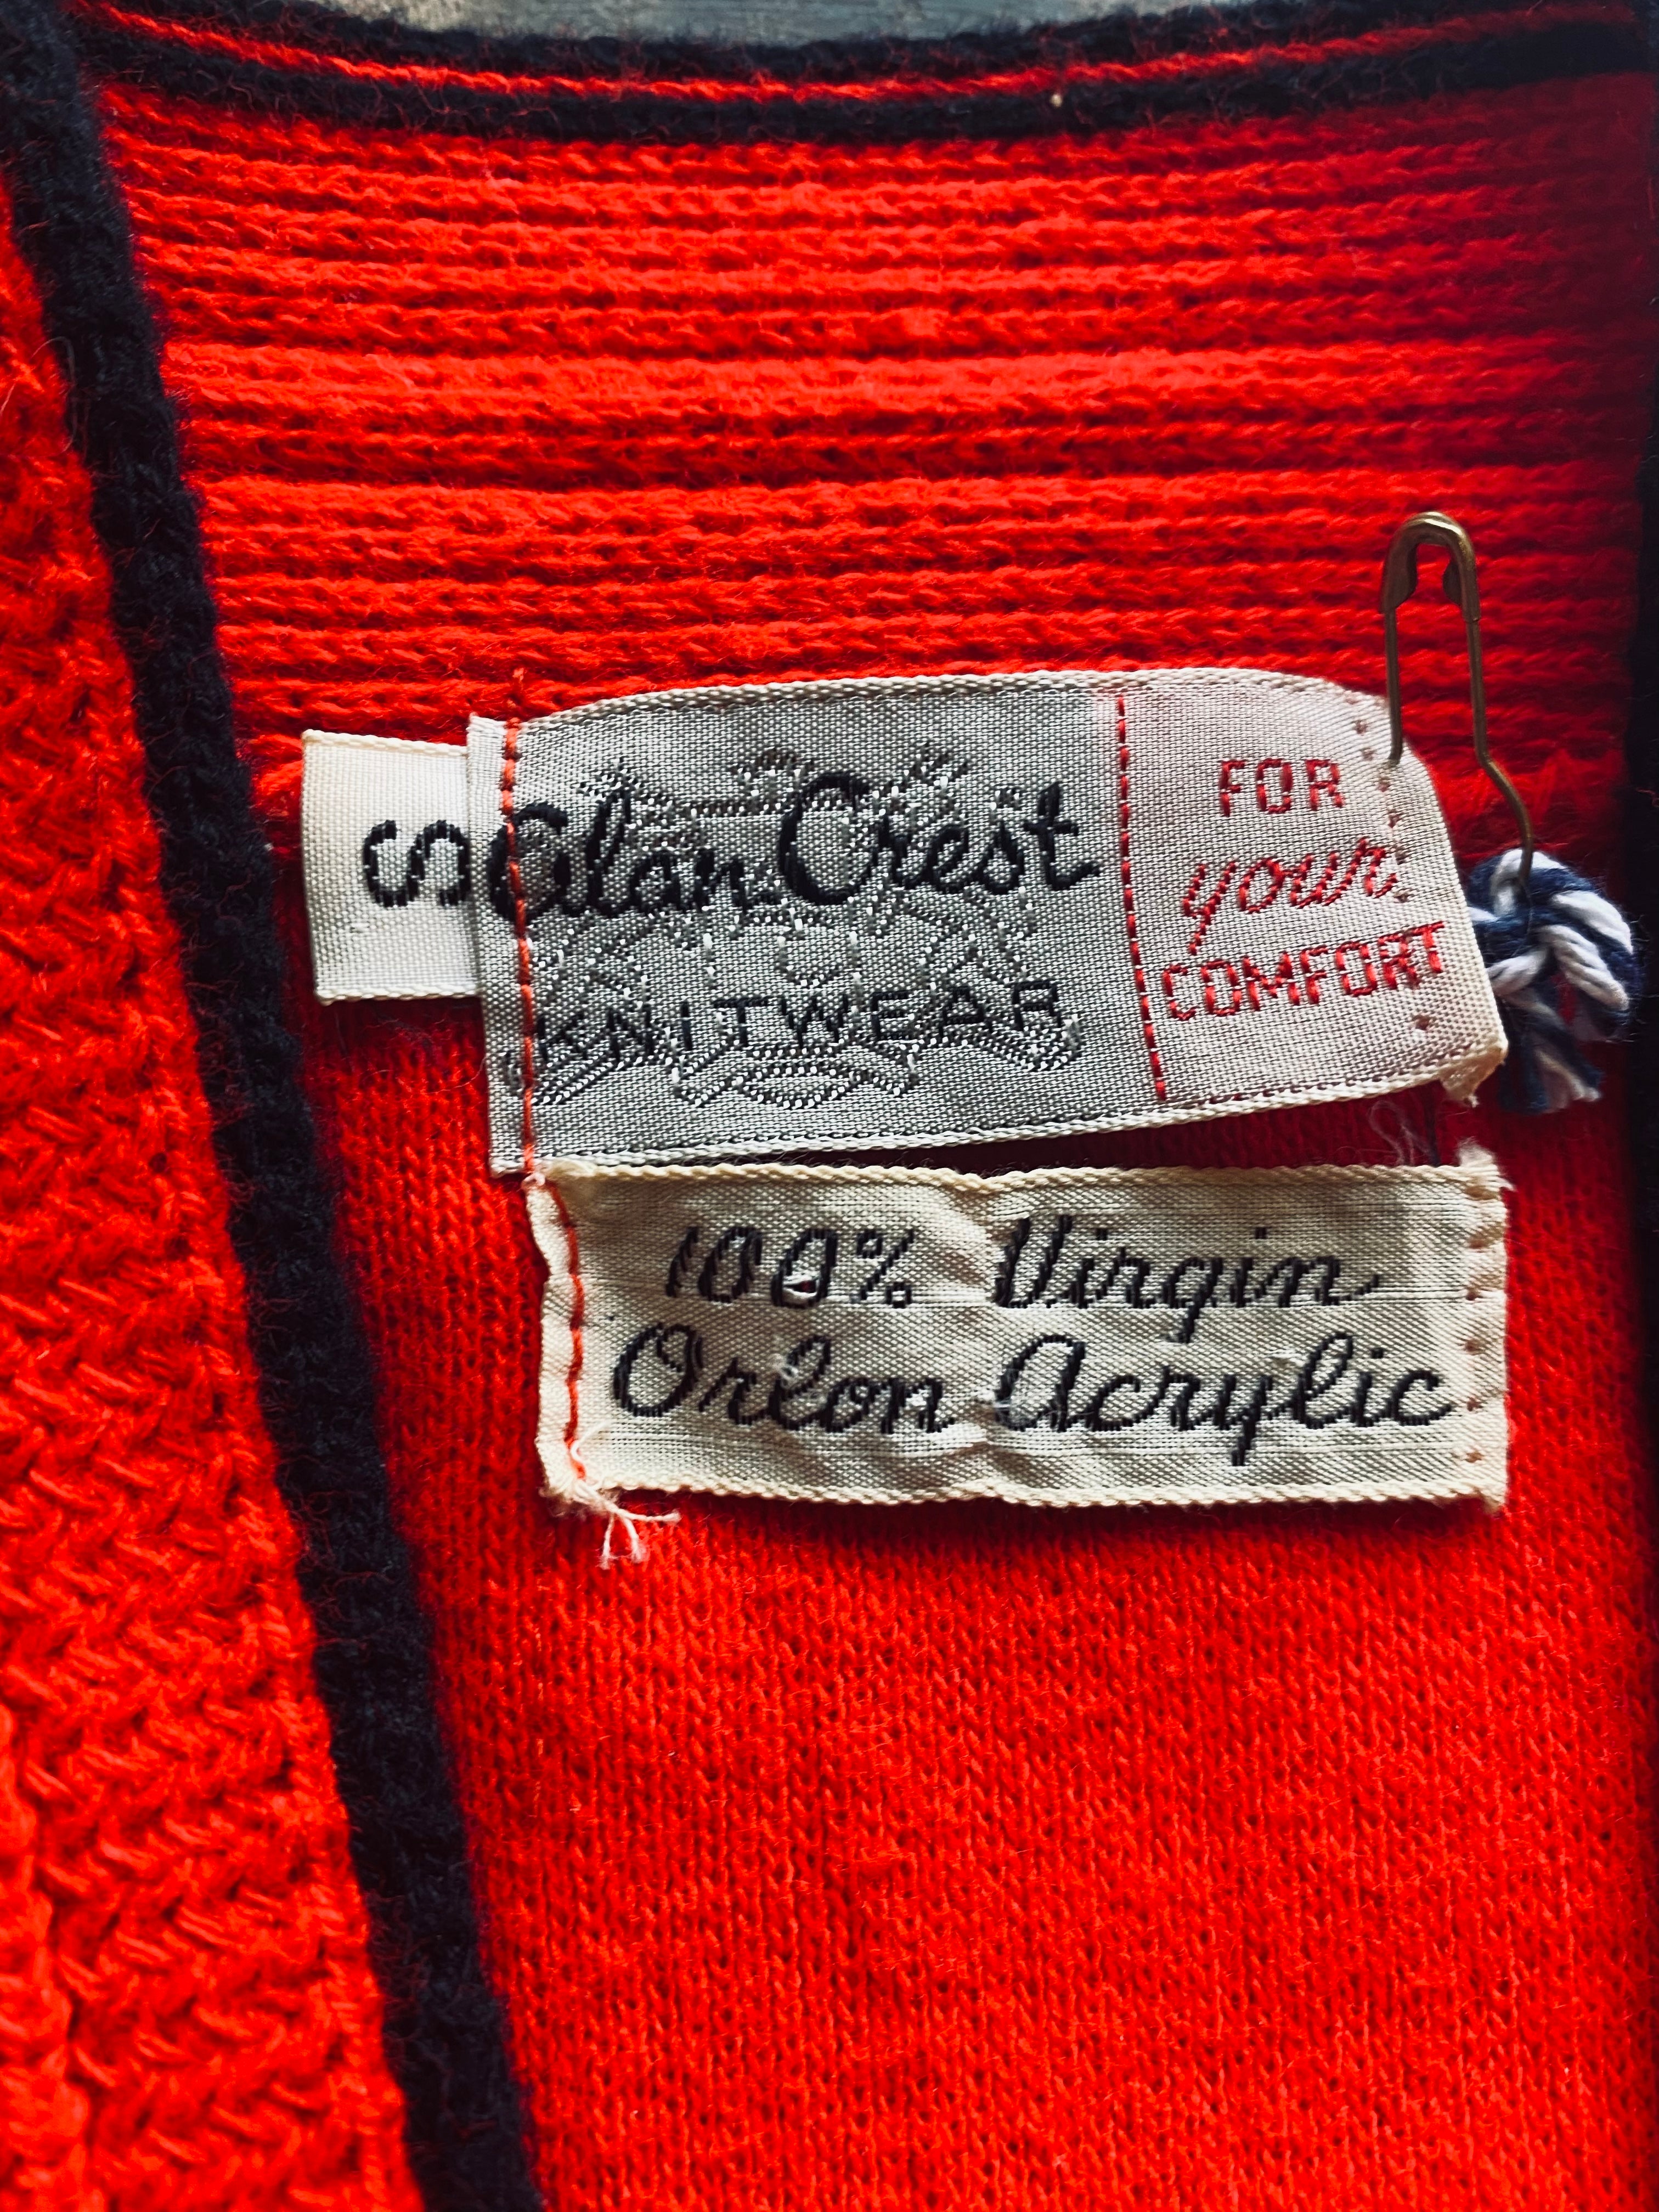 1960s Alan Crest Cardigan Vest | Small